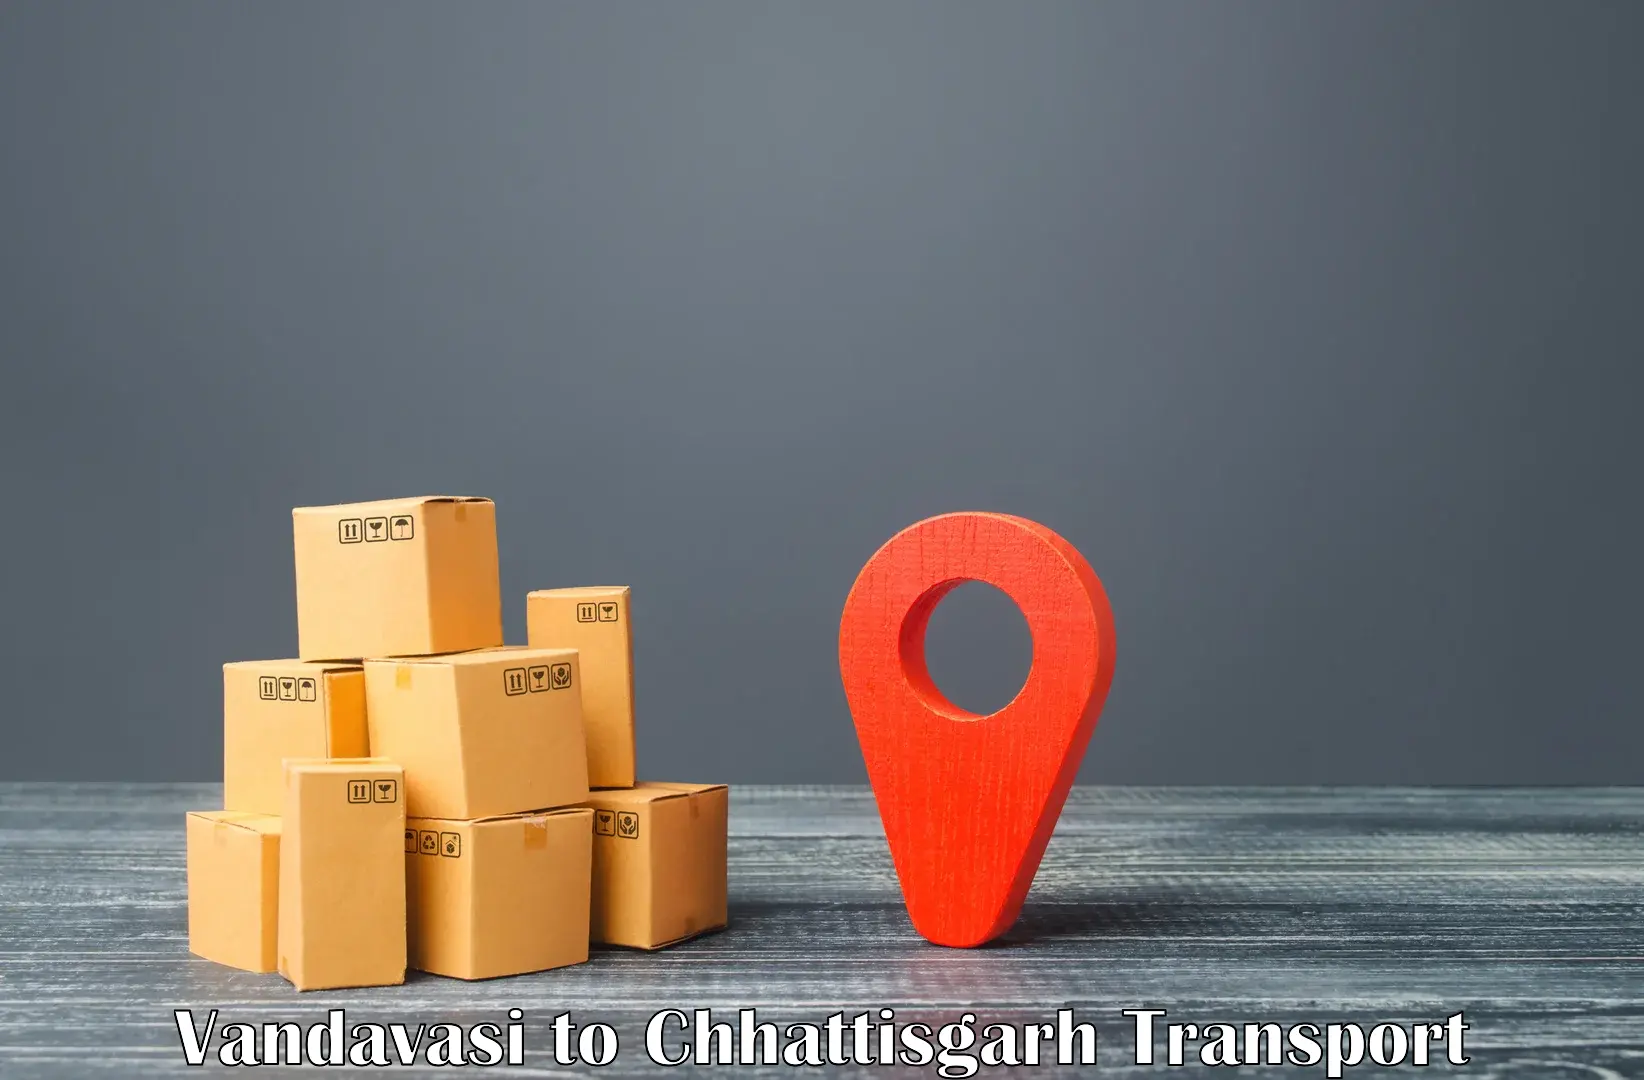 Truck transport companies in India Vandavasi to Patna Chhattisgarh